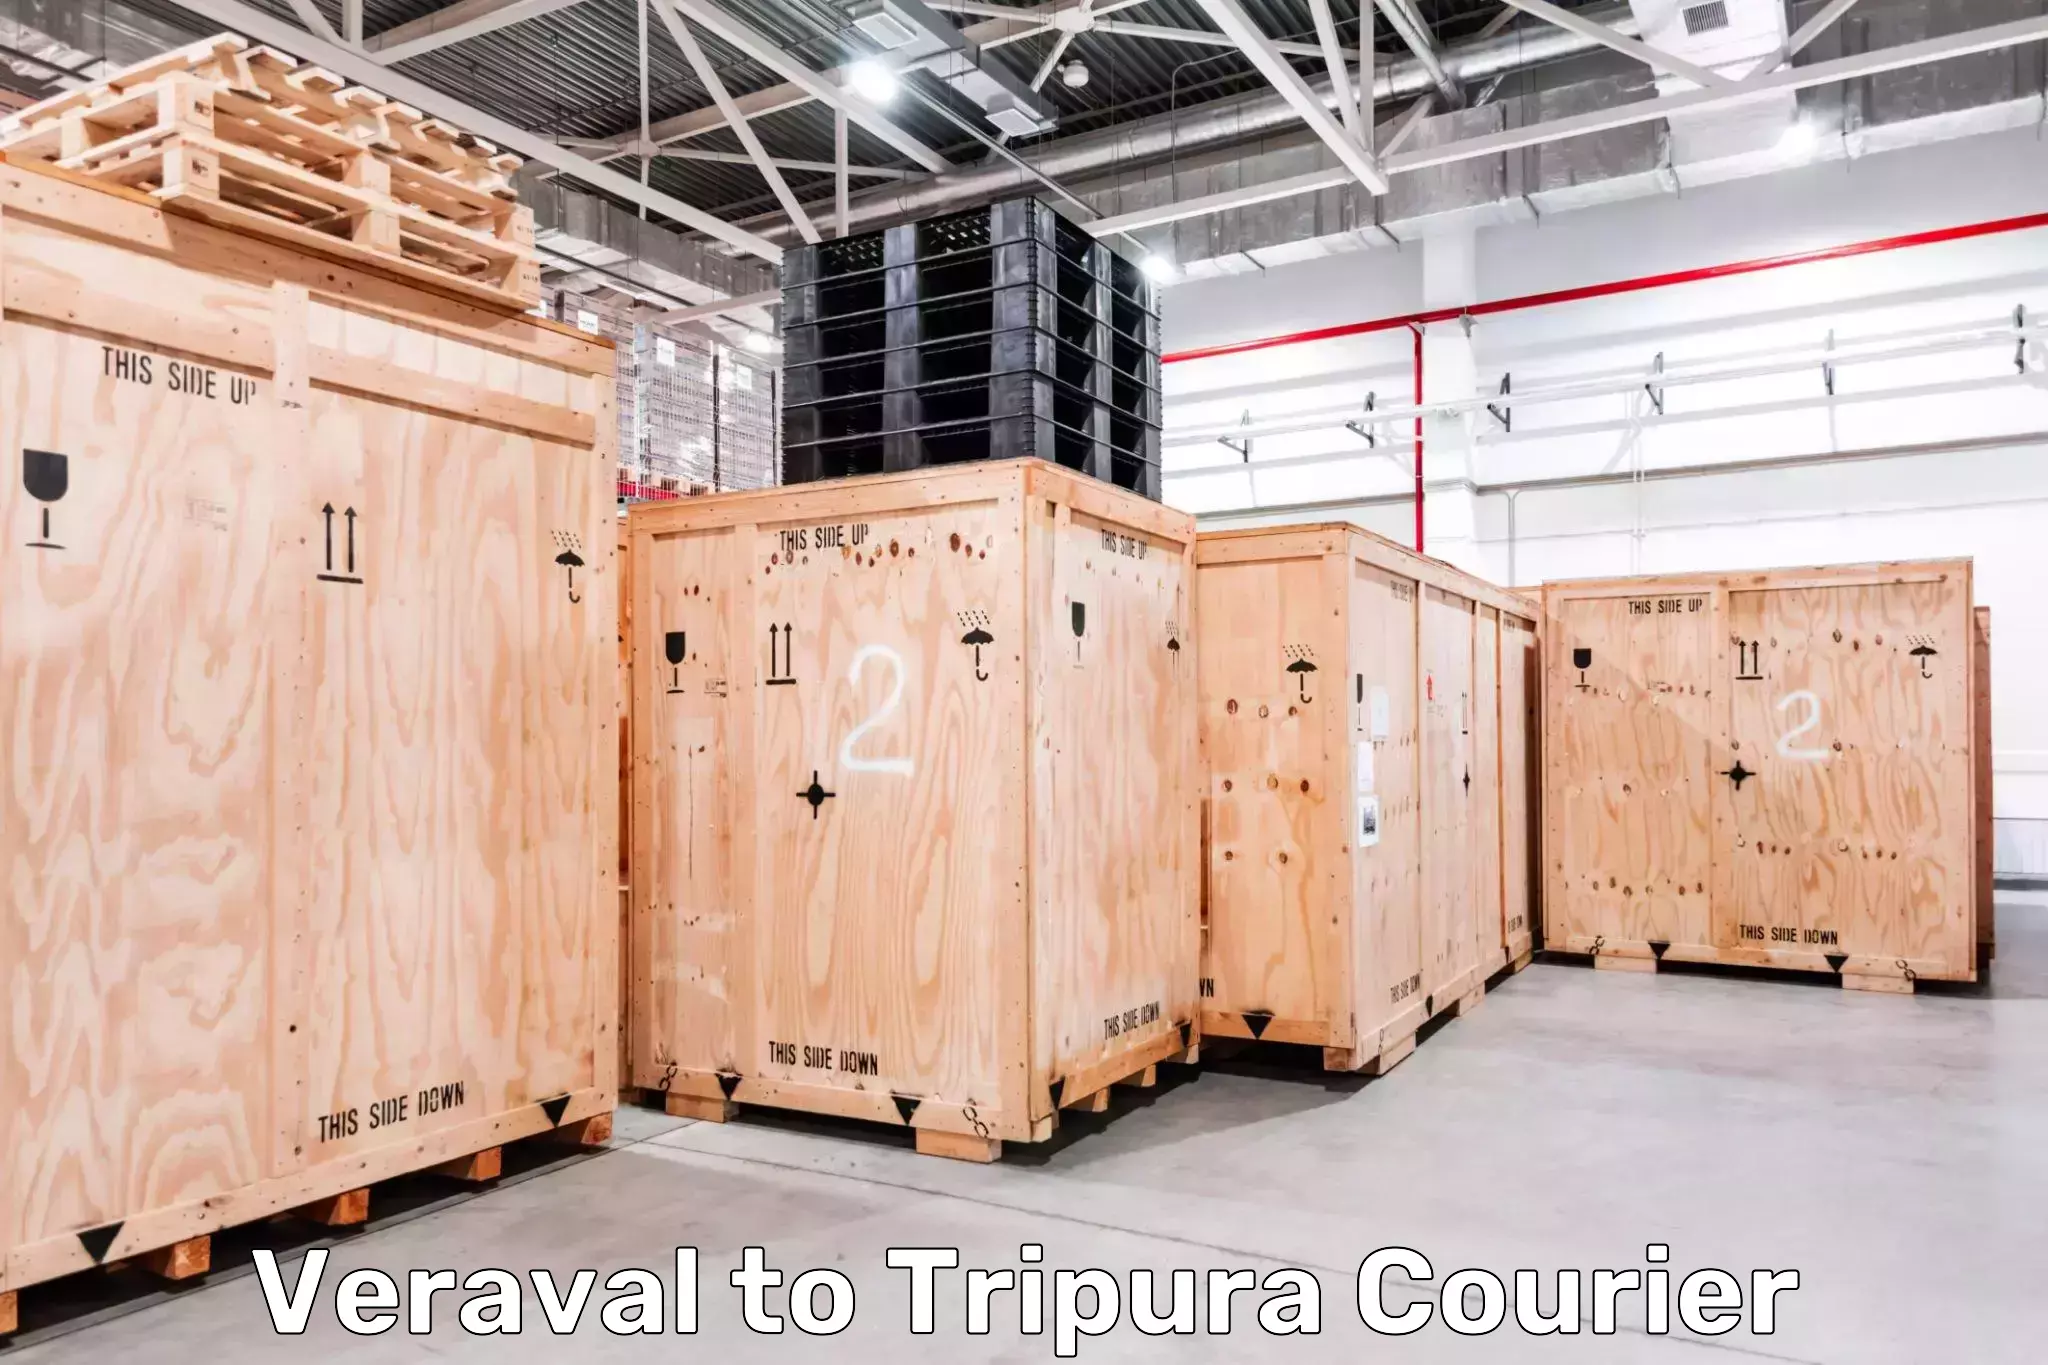 Express delivery capabilities Veraval to IIIT Agartala